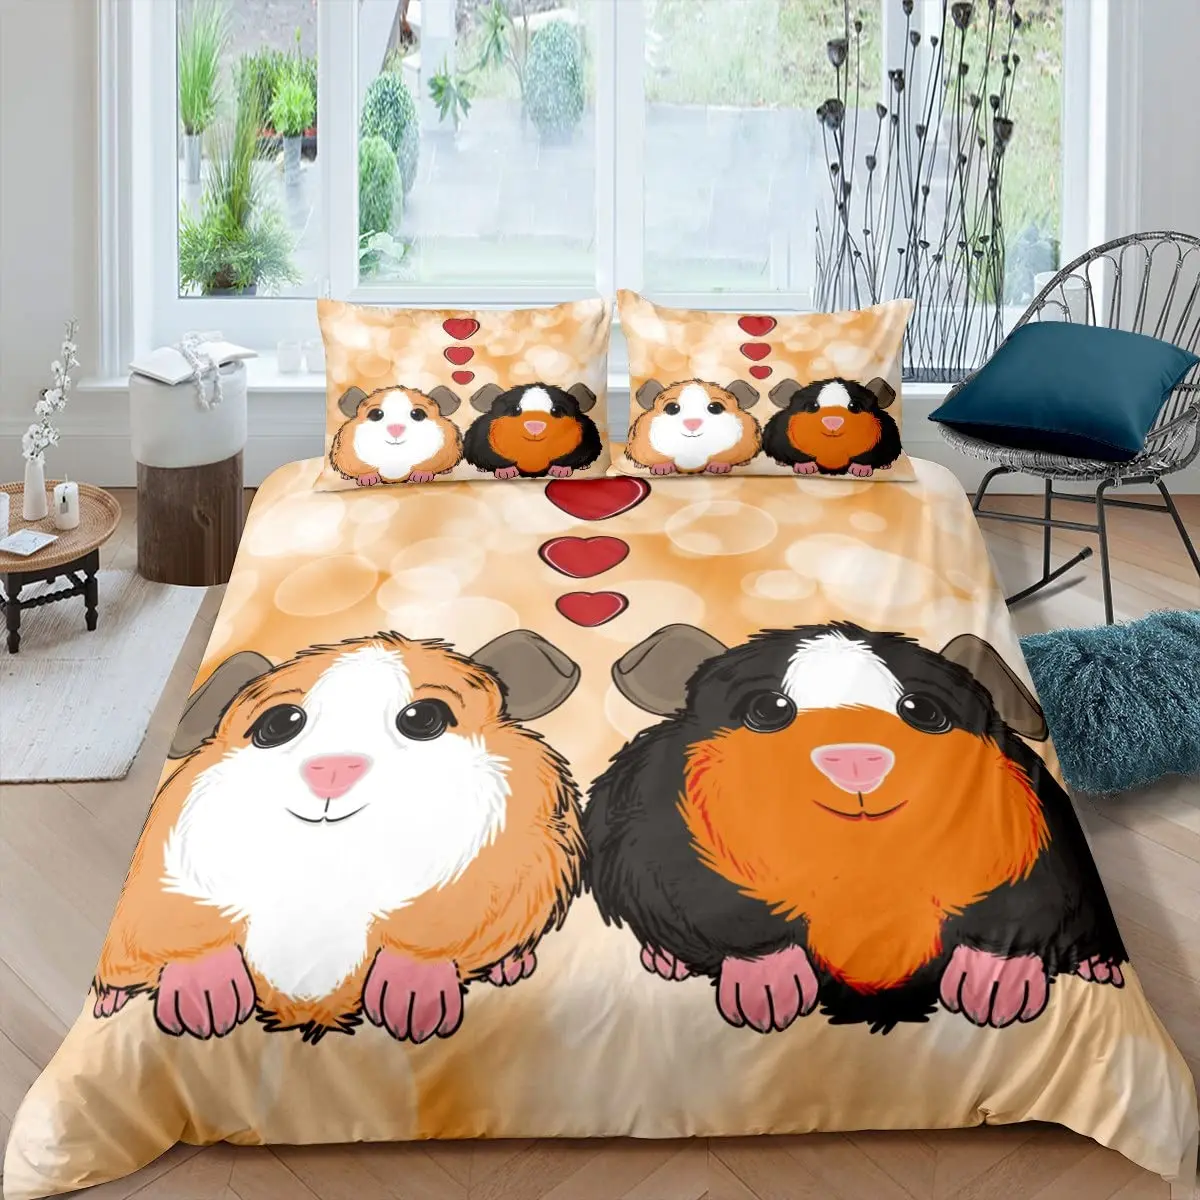 Guinea Pig Duvet Cover King/Queen Size for Kids Teens Boys Girls,Cute Cartoon Hamster Rodents Bedding Set for Dorm Bedroom,White